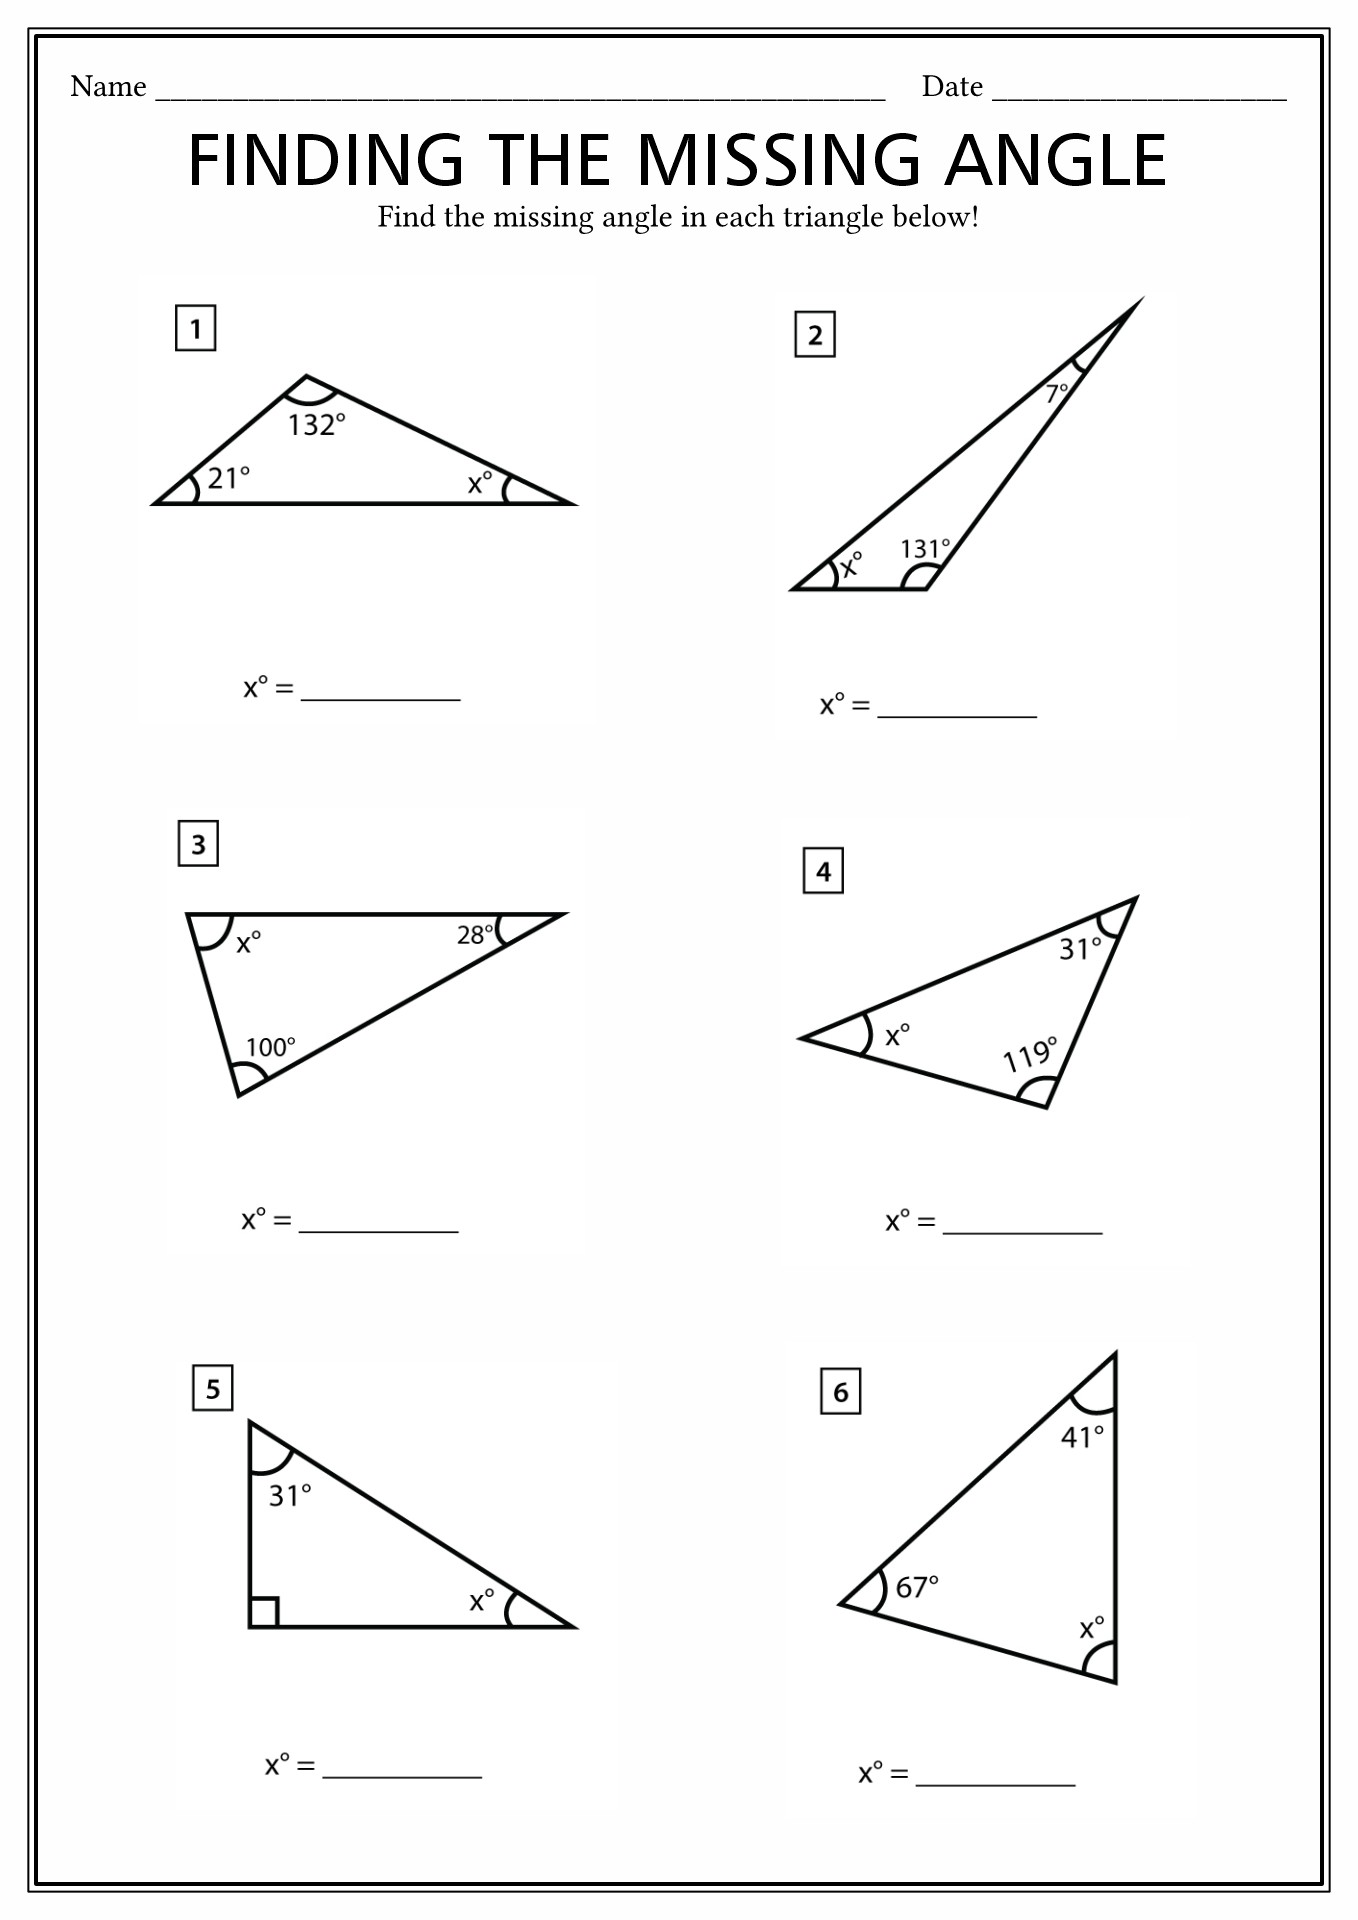 Similar Right Triangles Worksheet